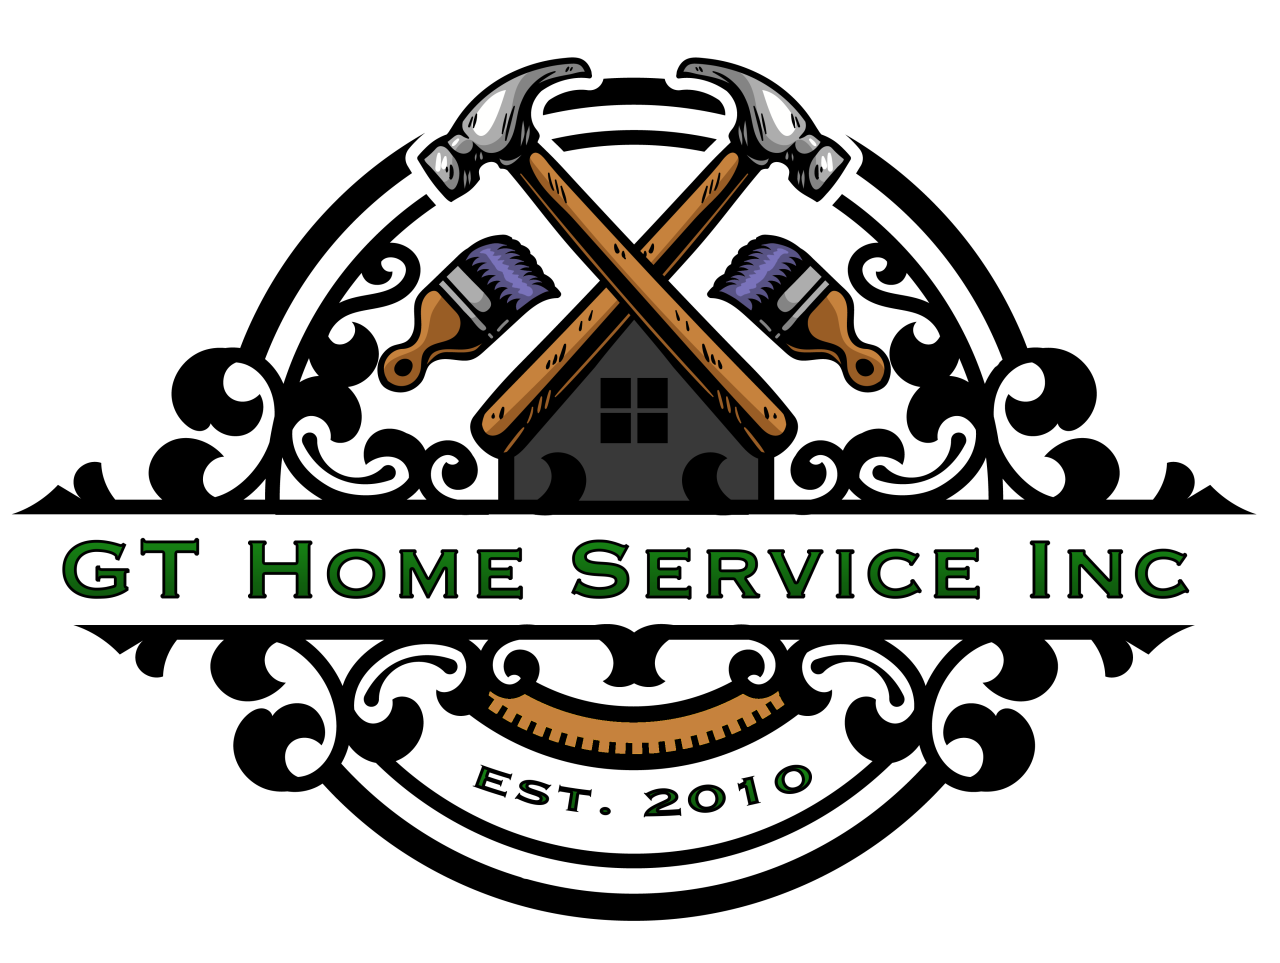 GT Home Service Inc